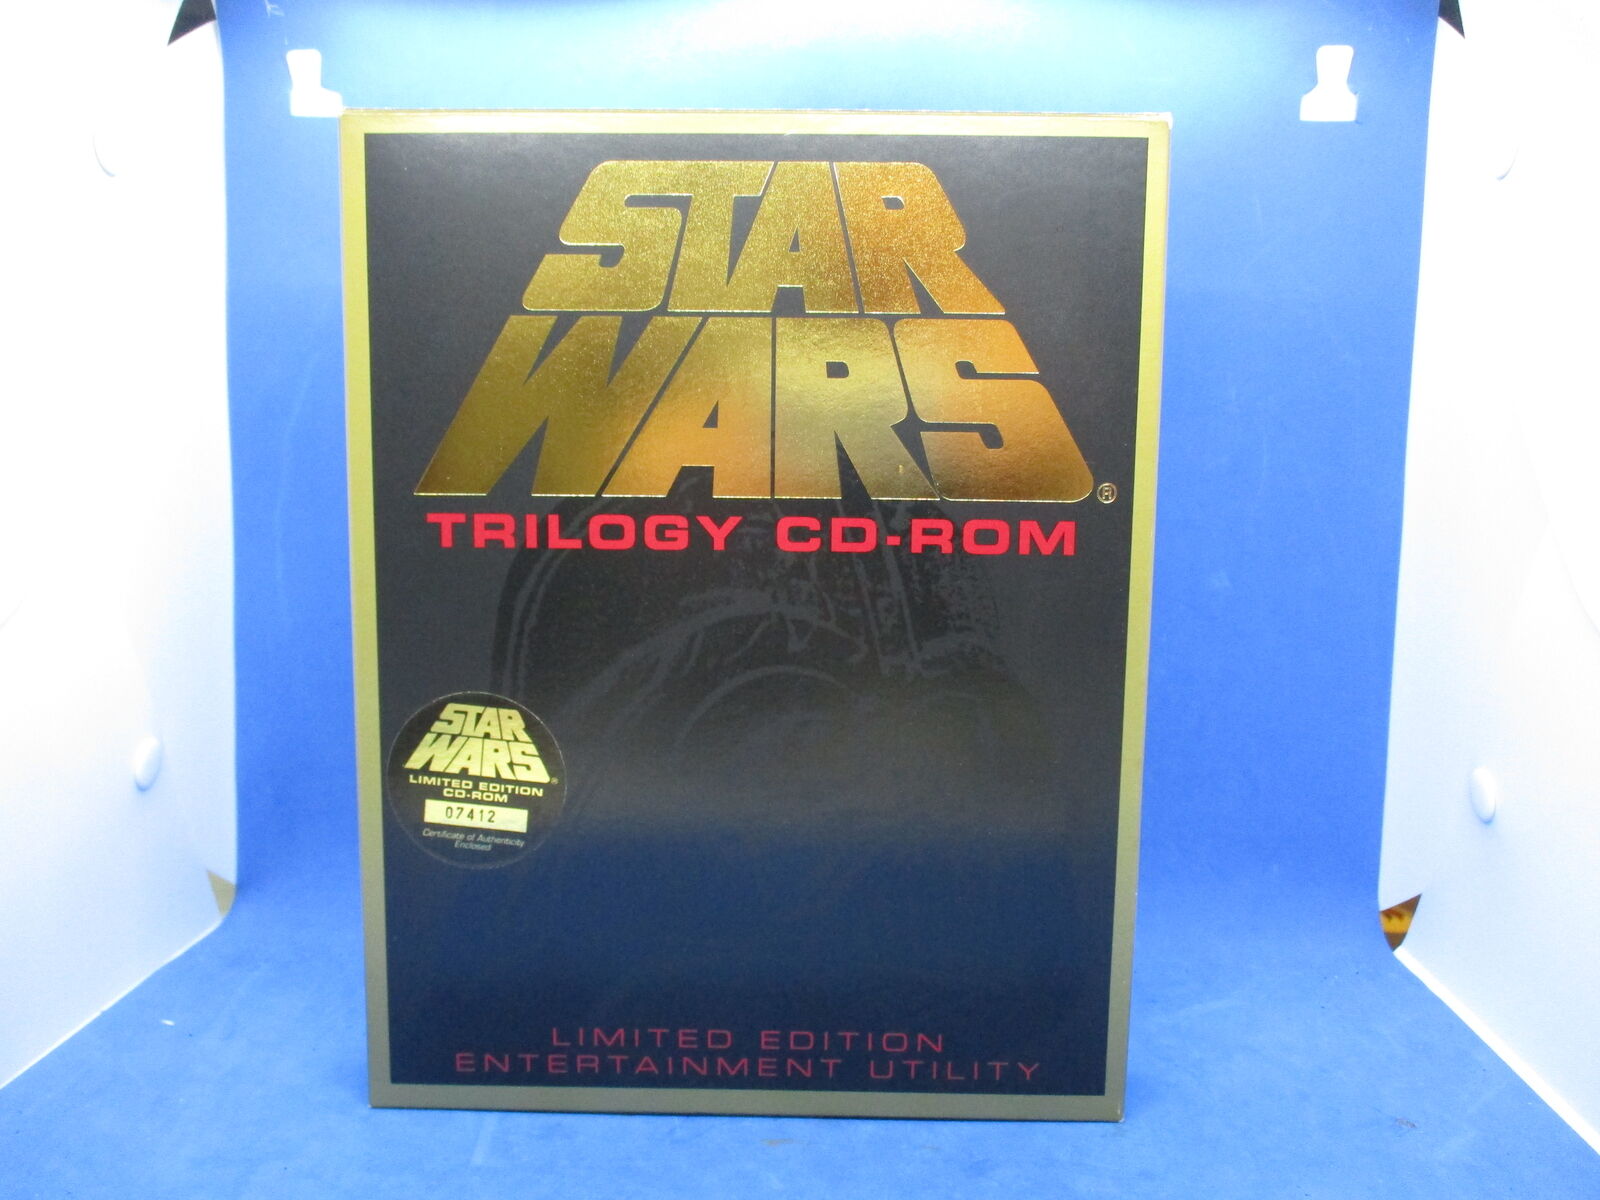 Star Wars Trilogy CD-ROM (Windows/Mac, 1995) Limited Edition, 